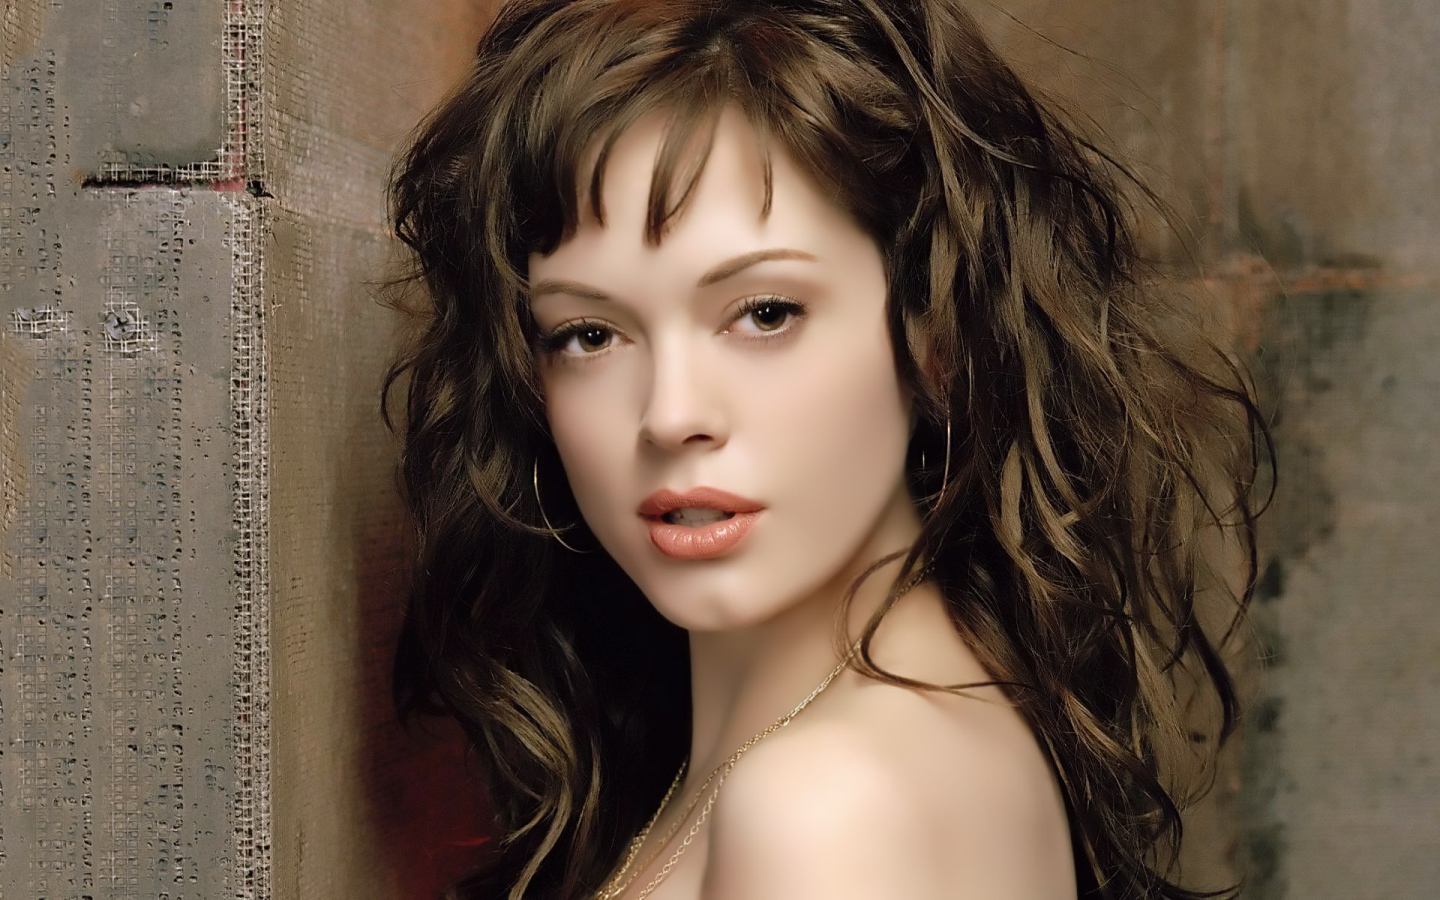 Cool Rose Mcgowan Actress for 1440 x 900 widescreen resolution